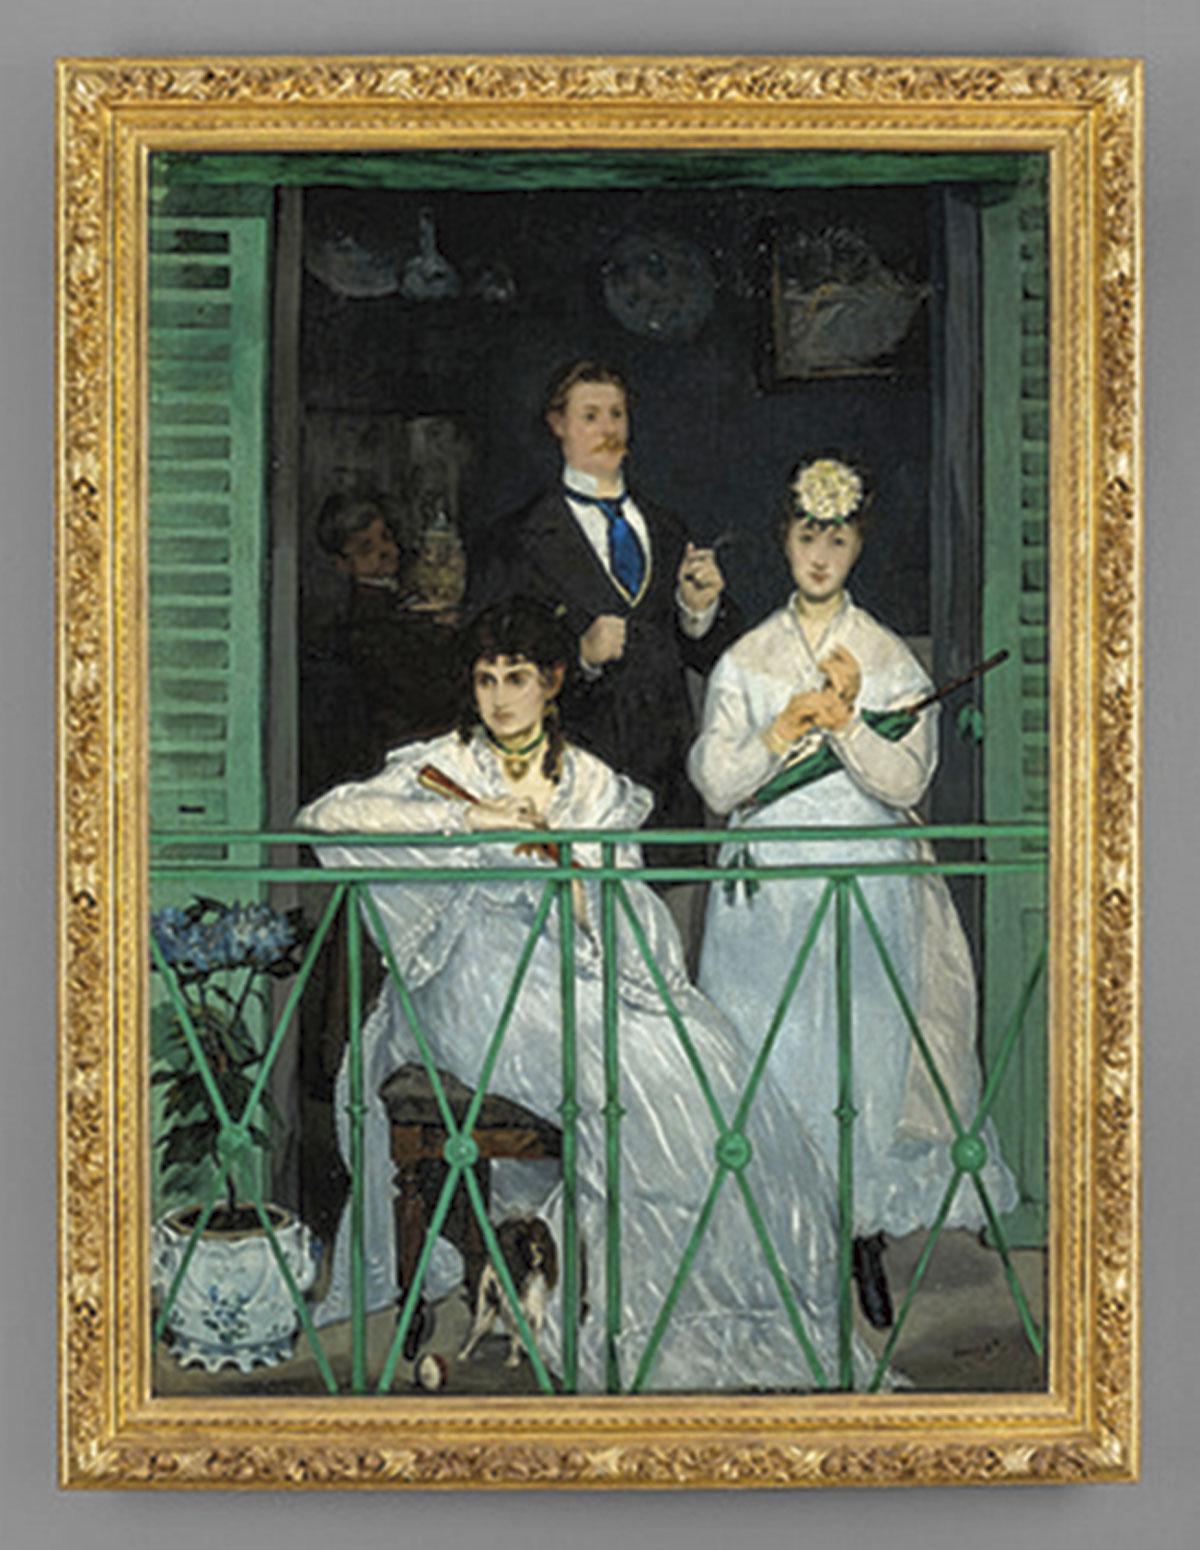 Le Balcon, Édouard Manet, 1868-1869